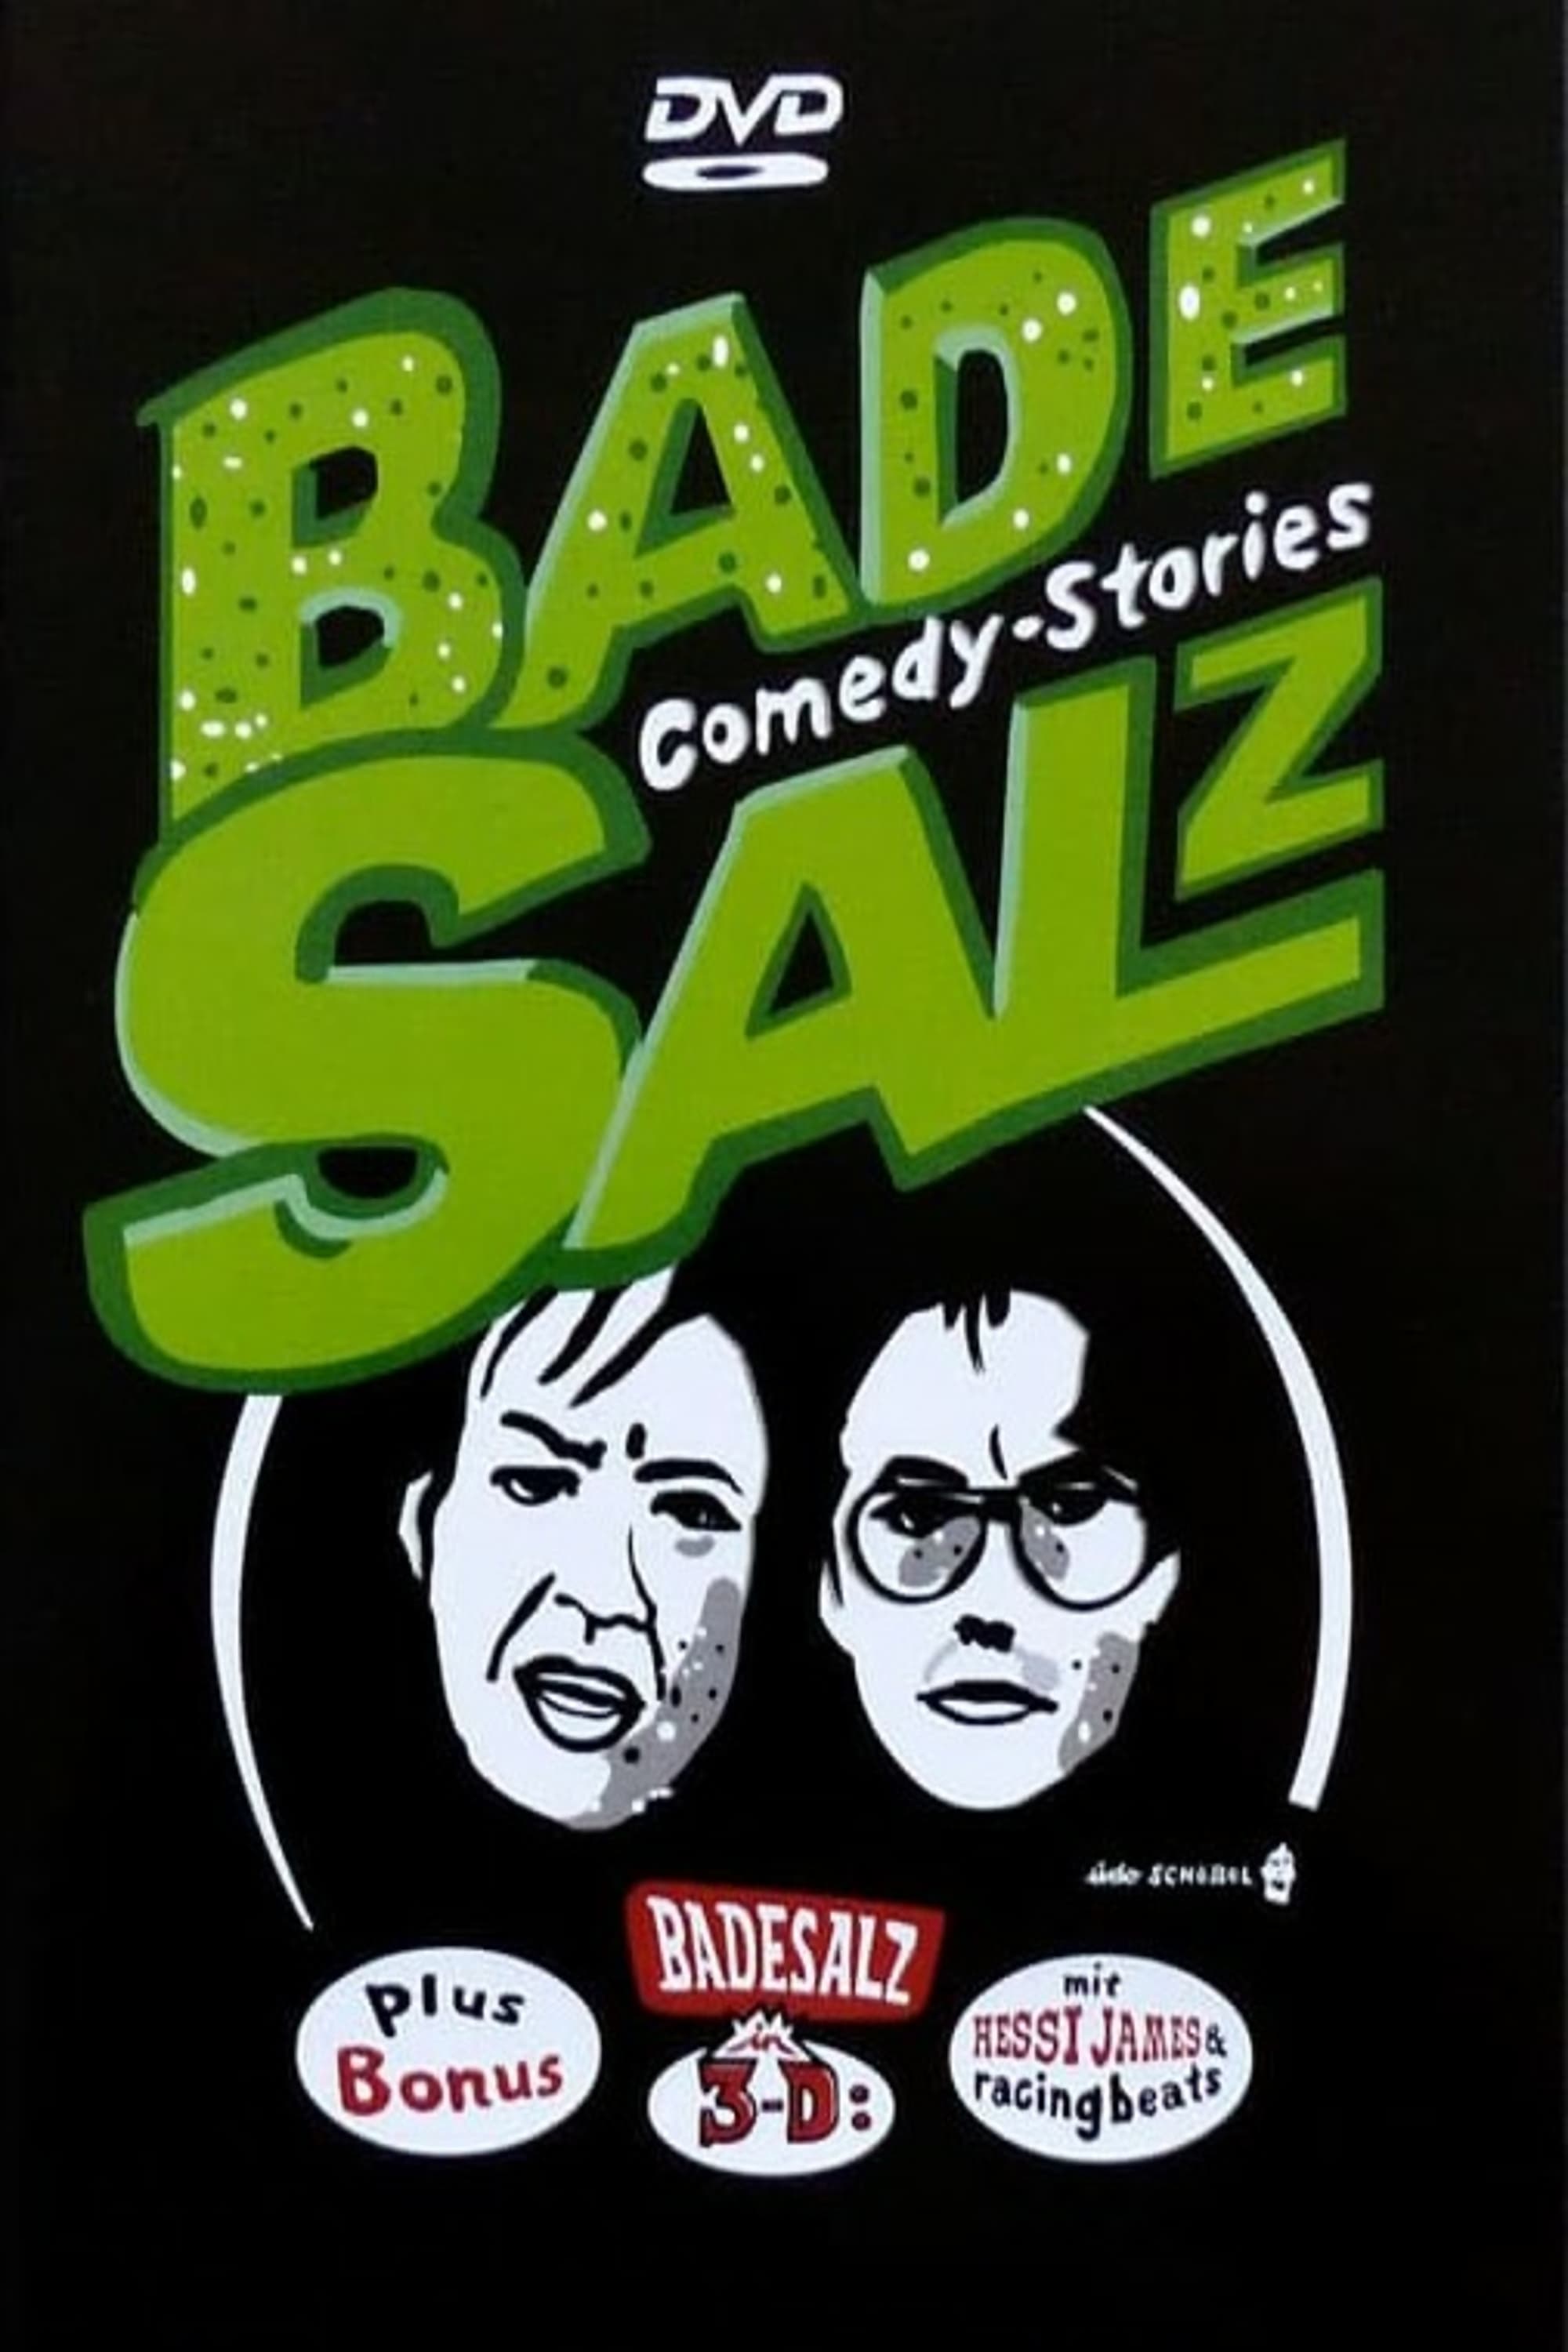 Badesalz - Comedy Stories